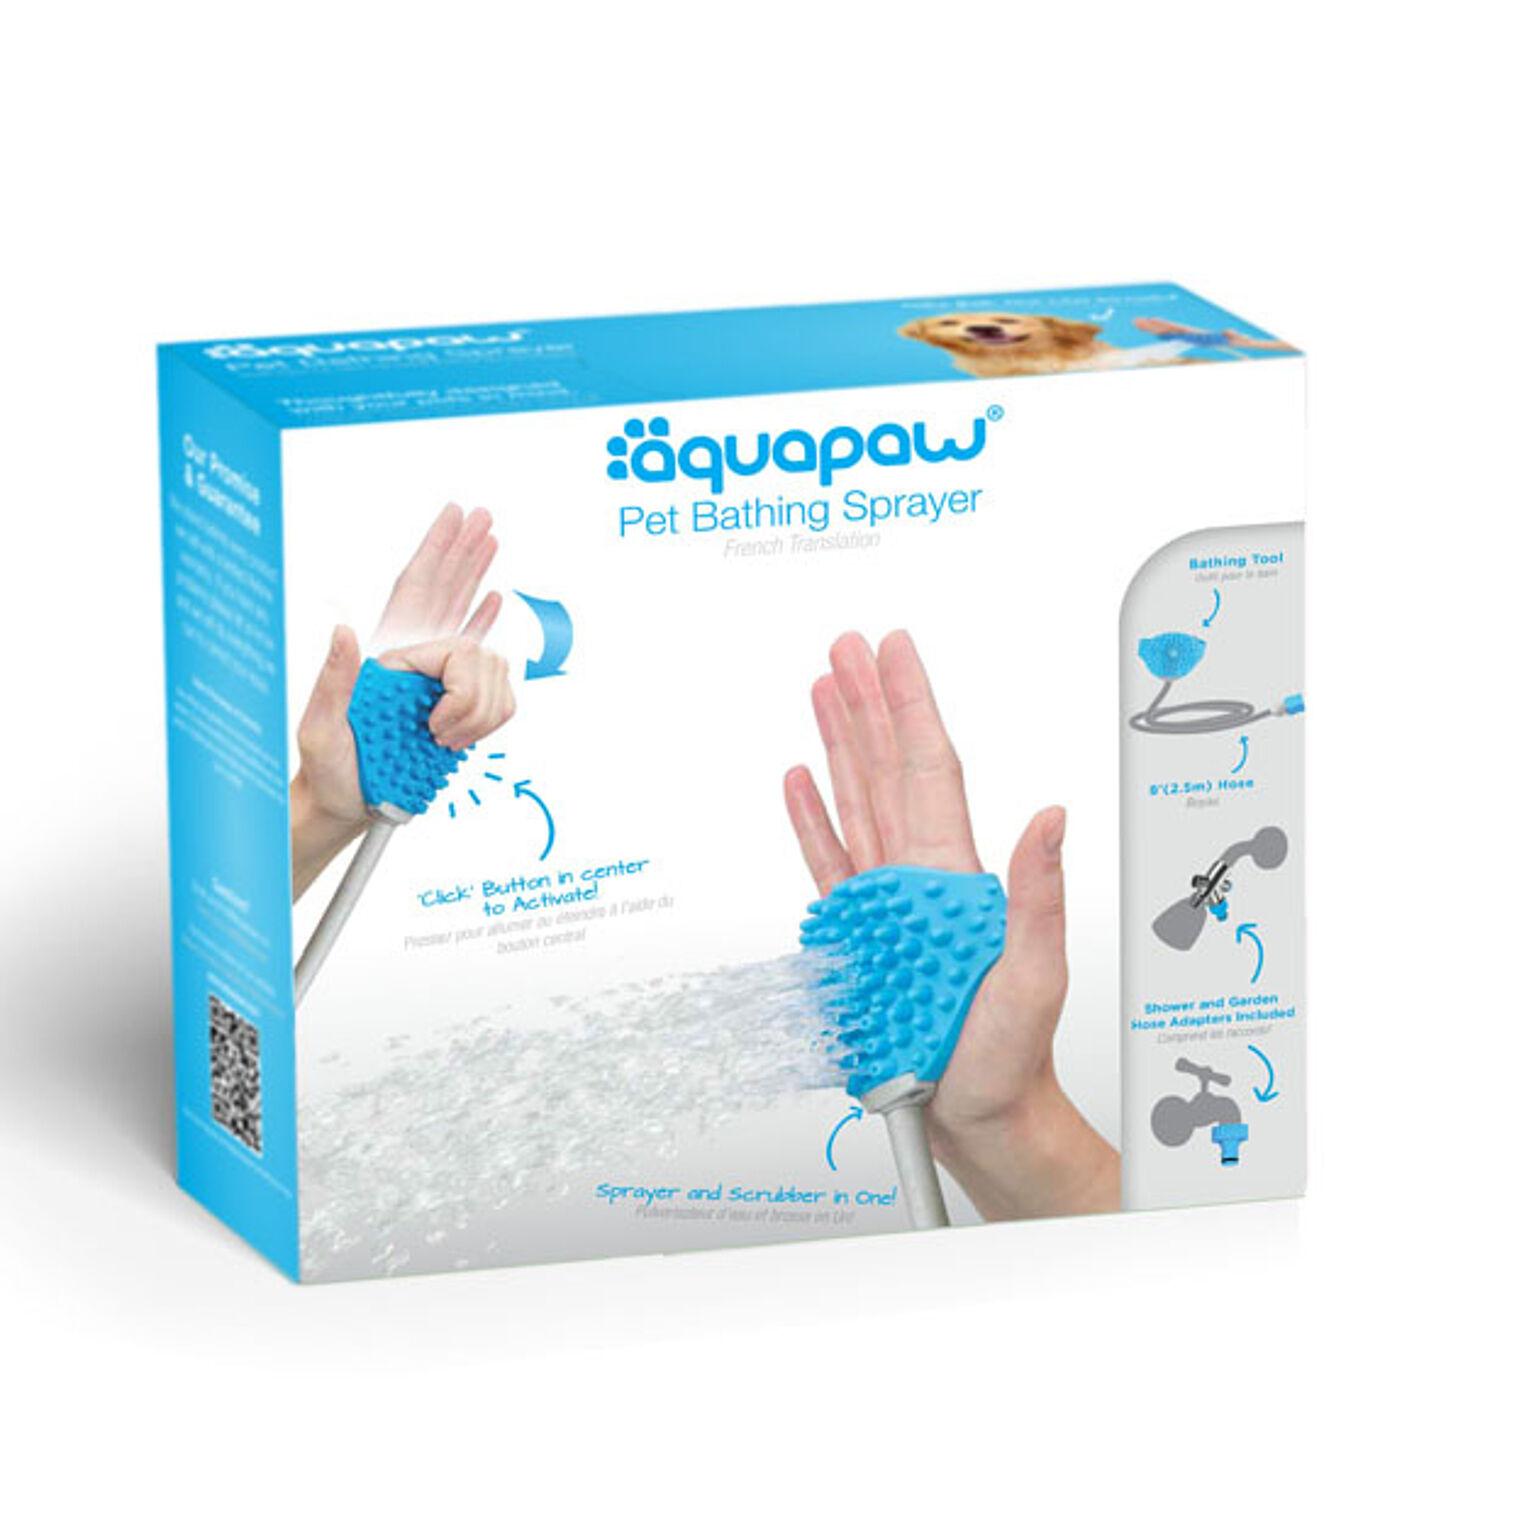 【Aquapaw】アクアパウ Pet Bathing Tool  ペット バスツール シャワー  シャワーヘッド シャワーホース